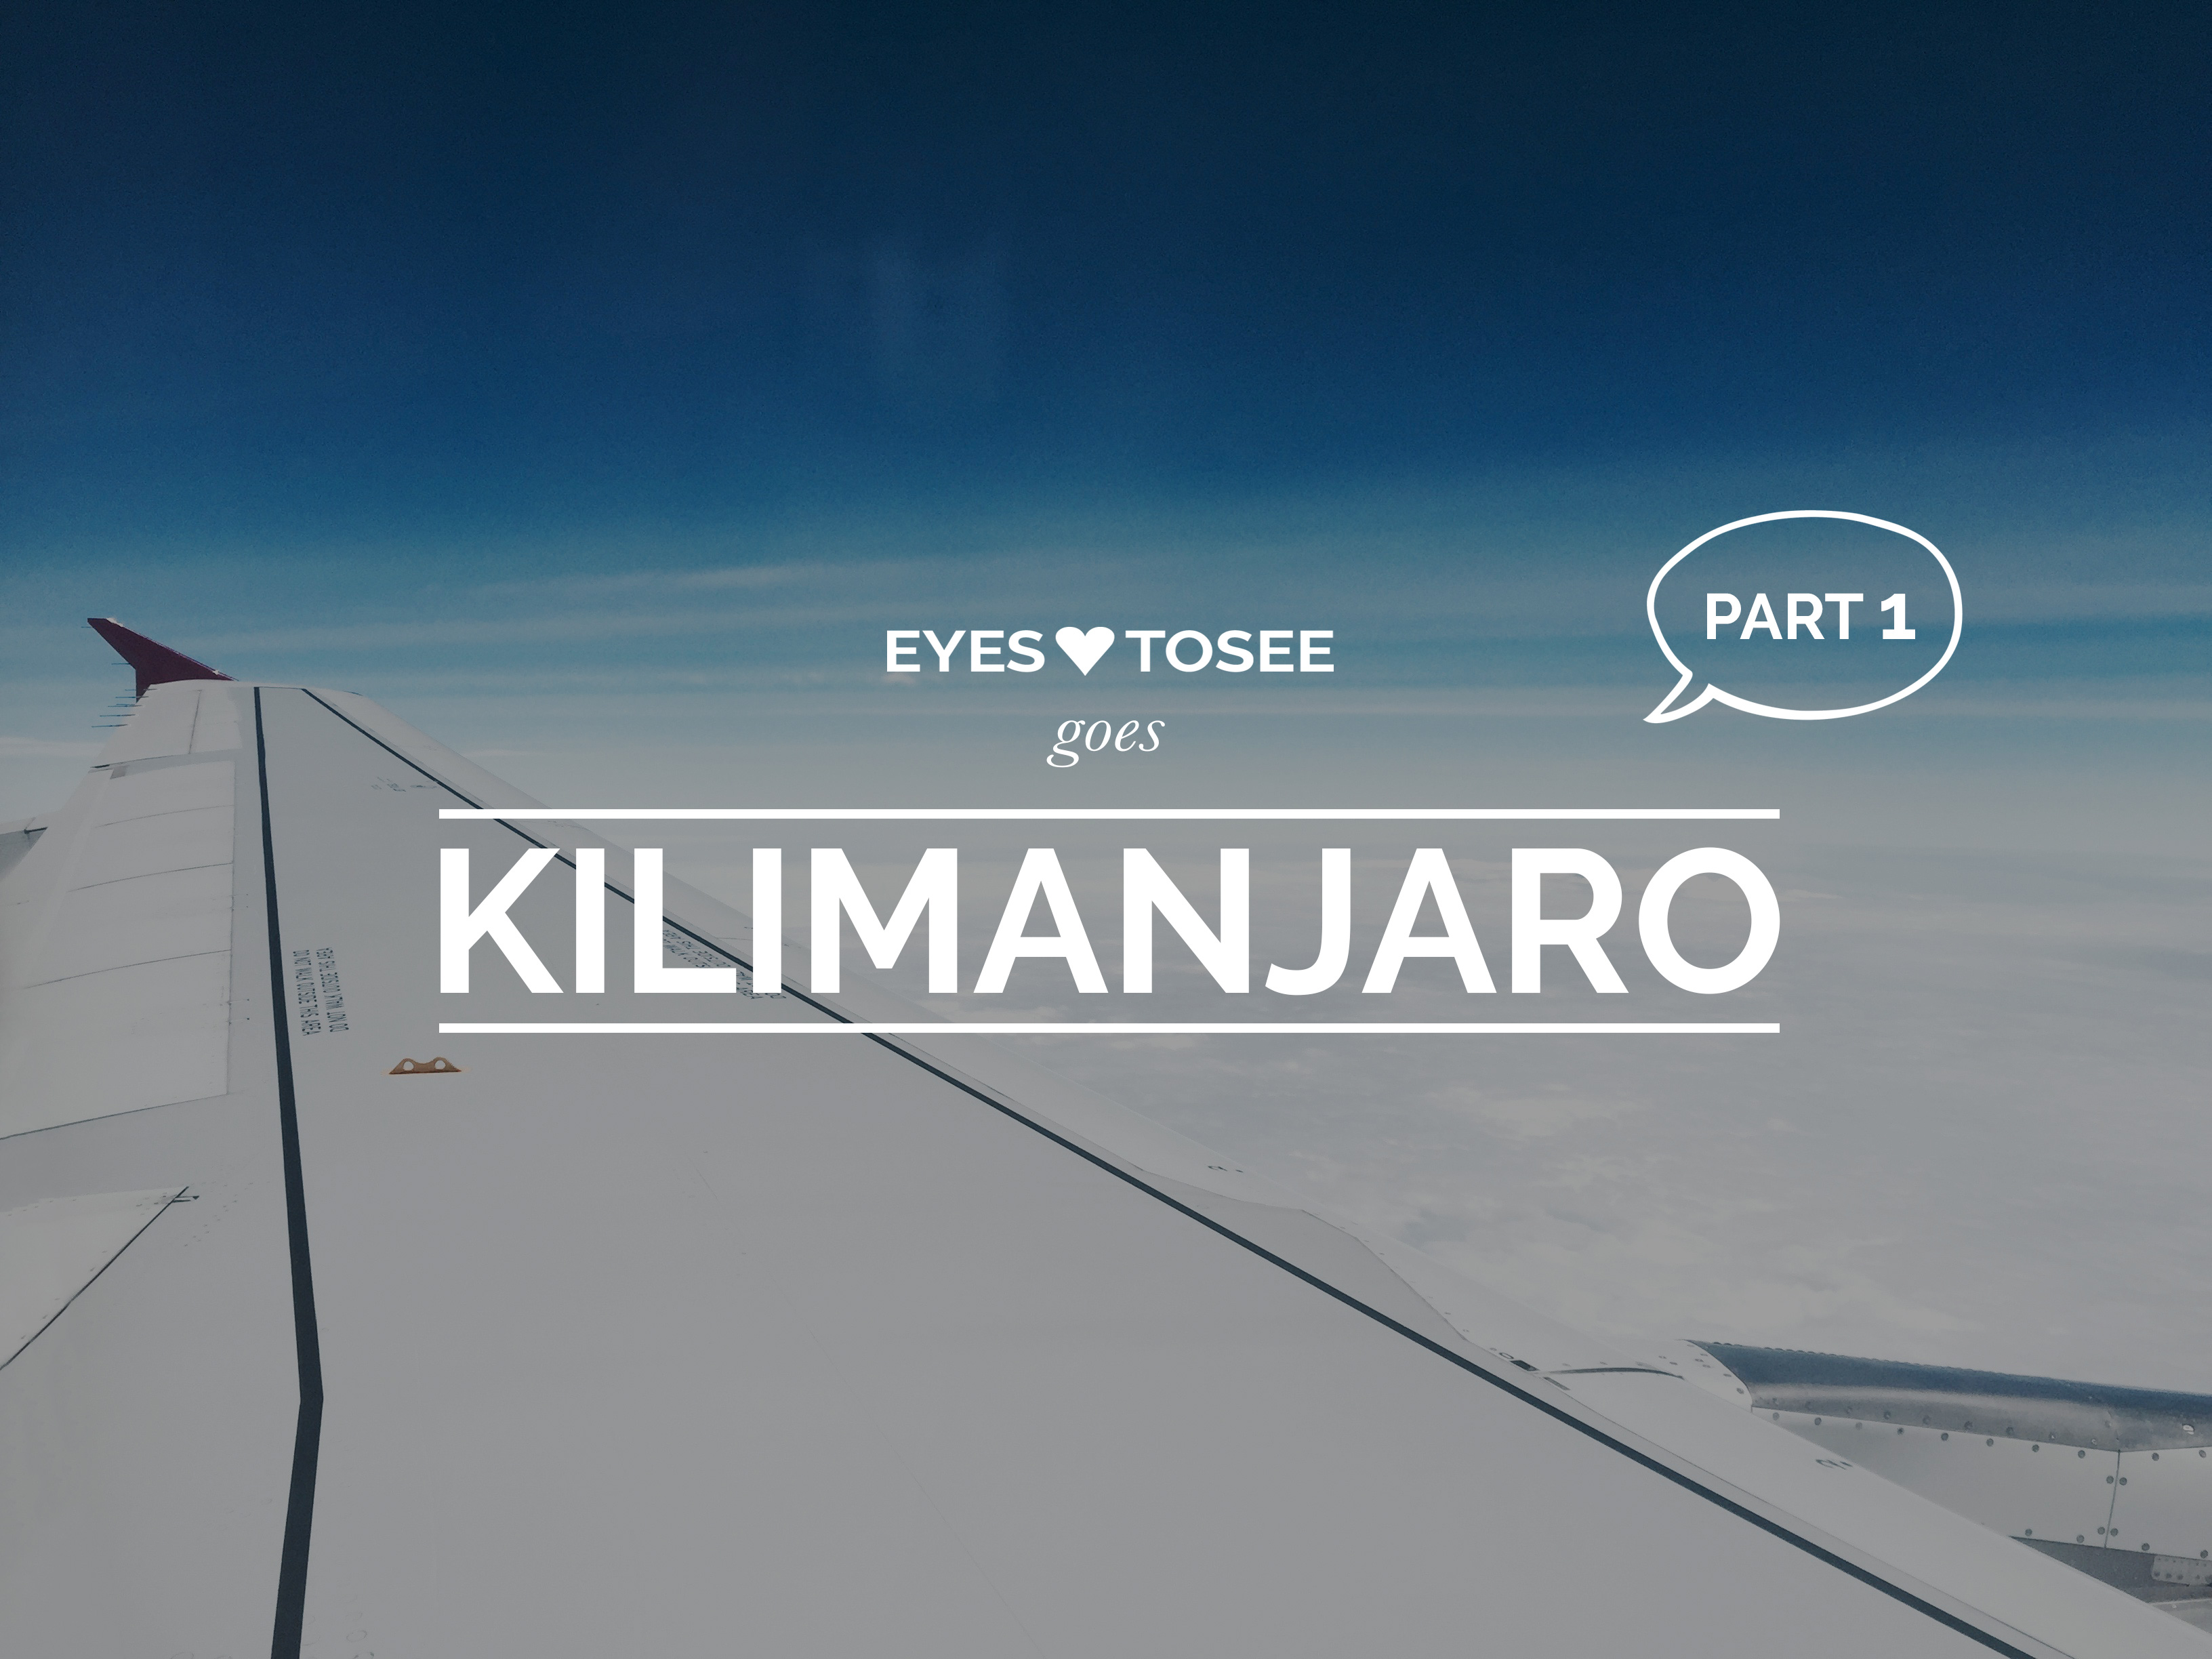 Kilimanjaro Part 1